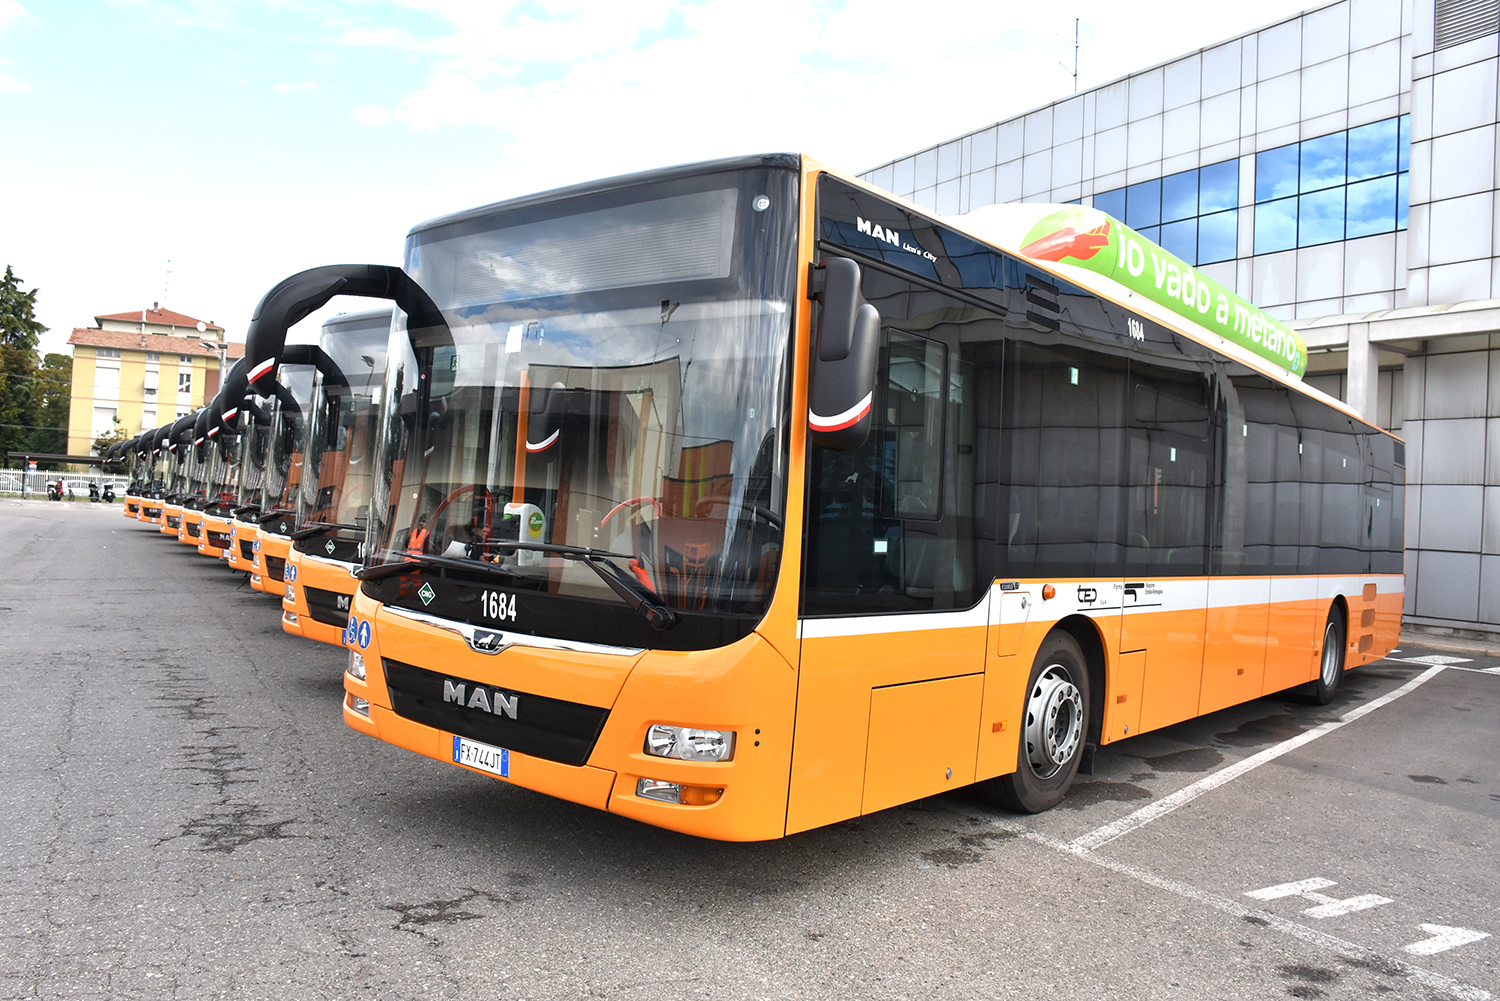 Autobus a gas per Parma